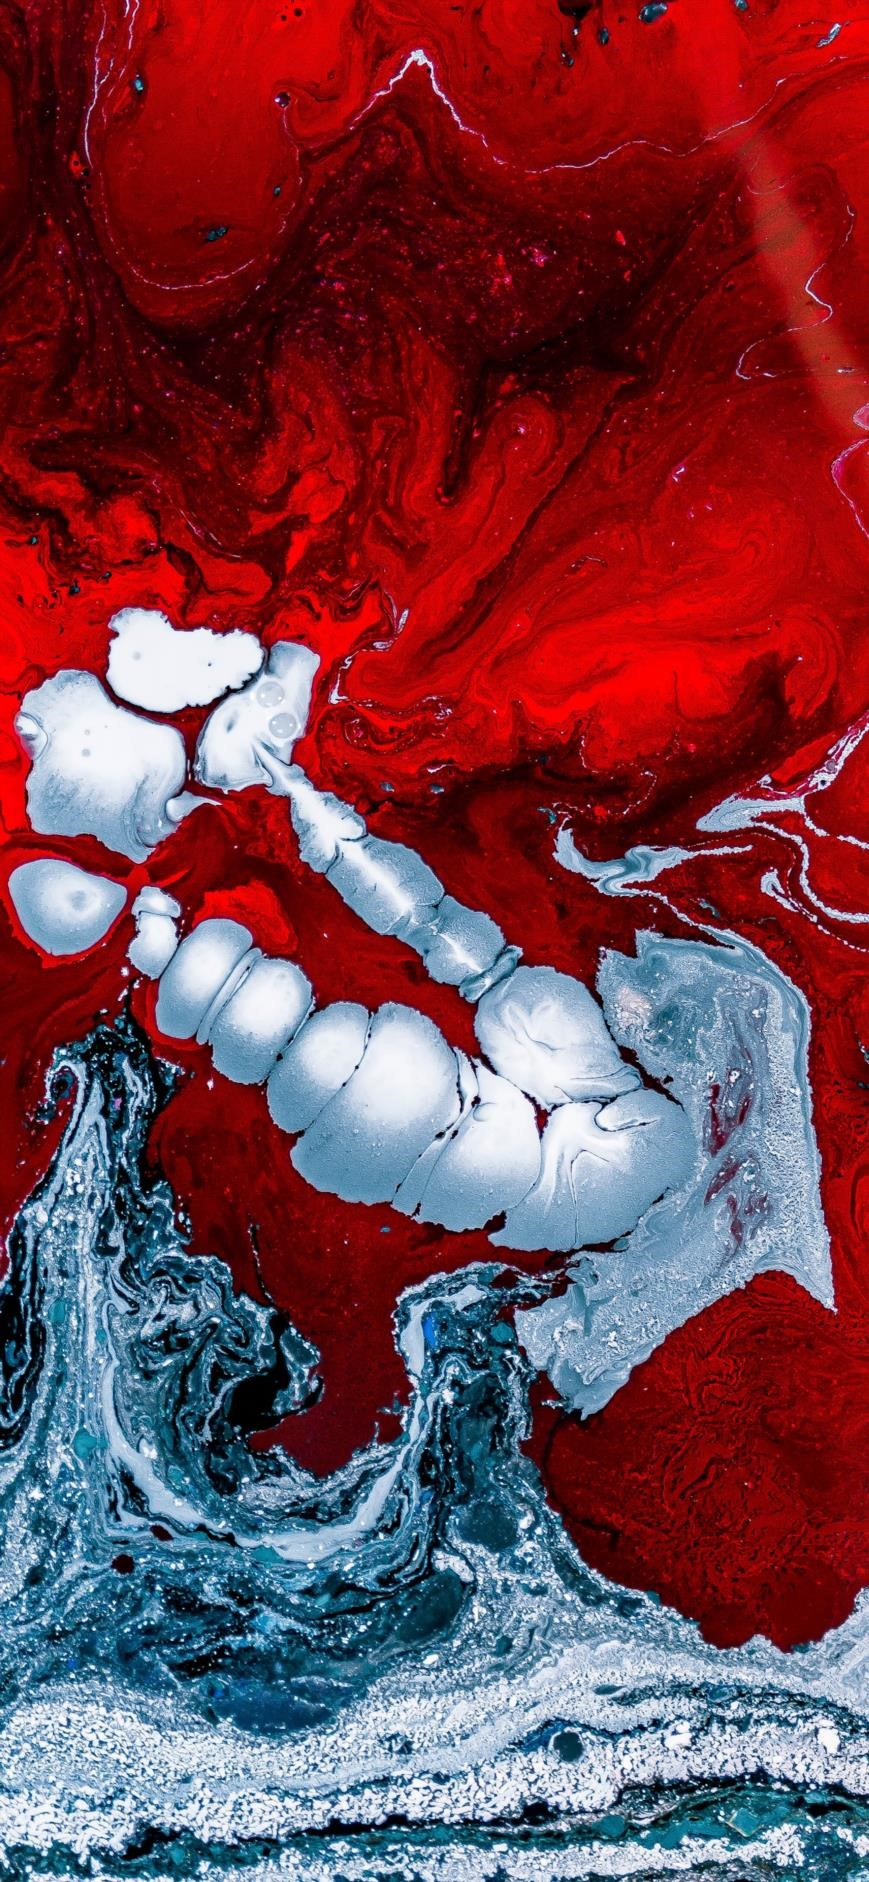 IPhone Wallpaper Abstract Liquids Red Grey Wallpaper Art: Free HD Download